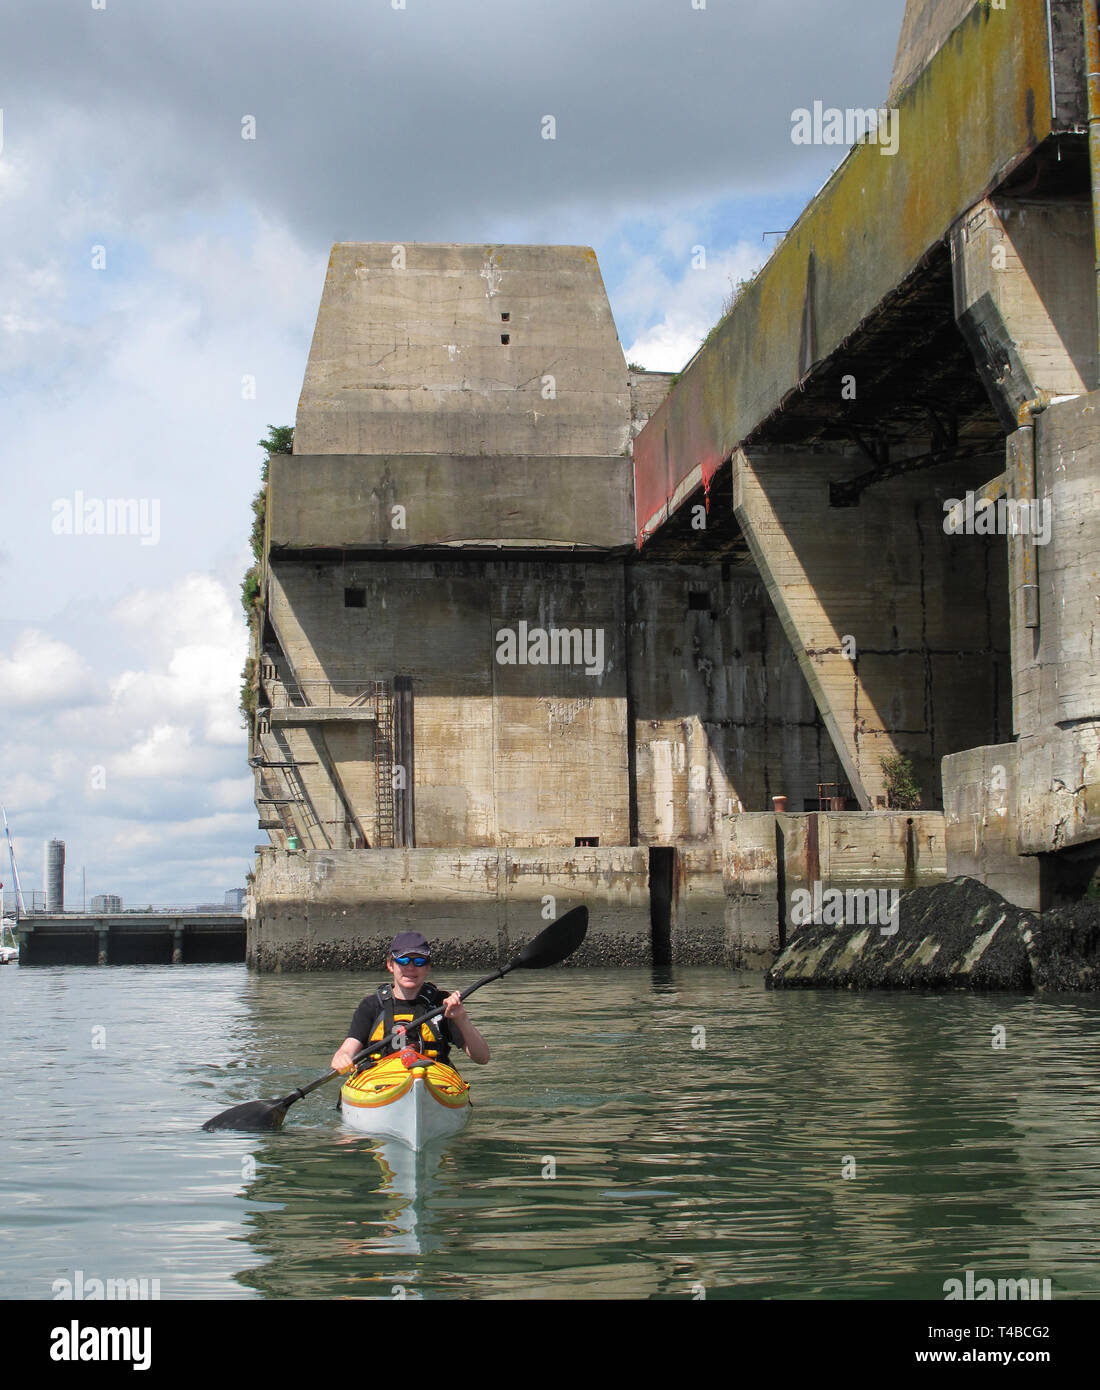 Kayaking, Lorient U-Boat pens, France Stock Photo - Alamy